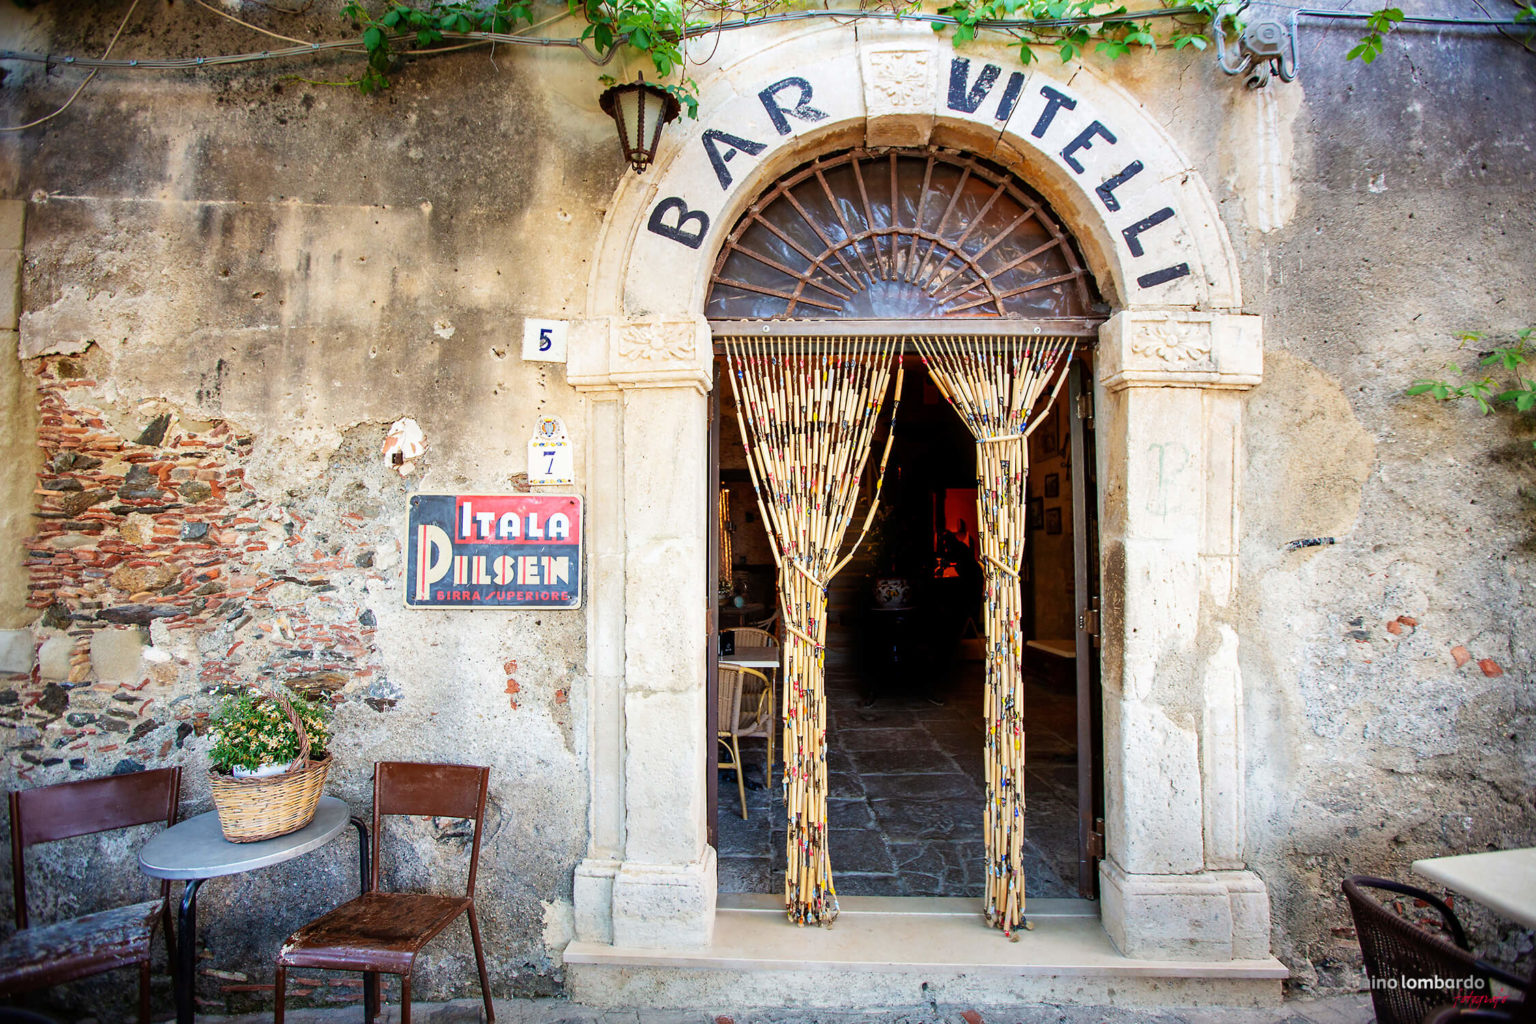 Bar Vitelli Savoca, historical place photographed by Nino Lombardo Sicily wedding photographer